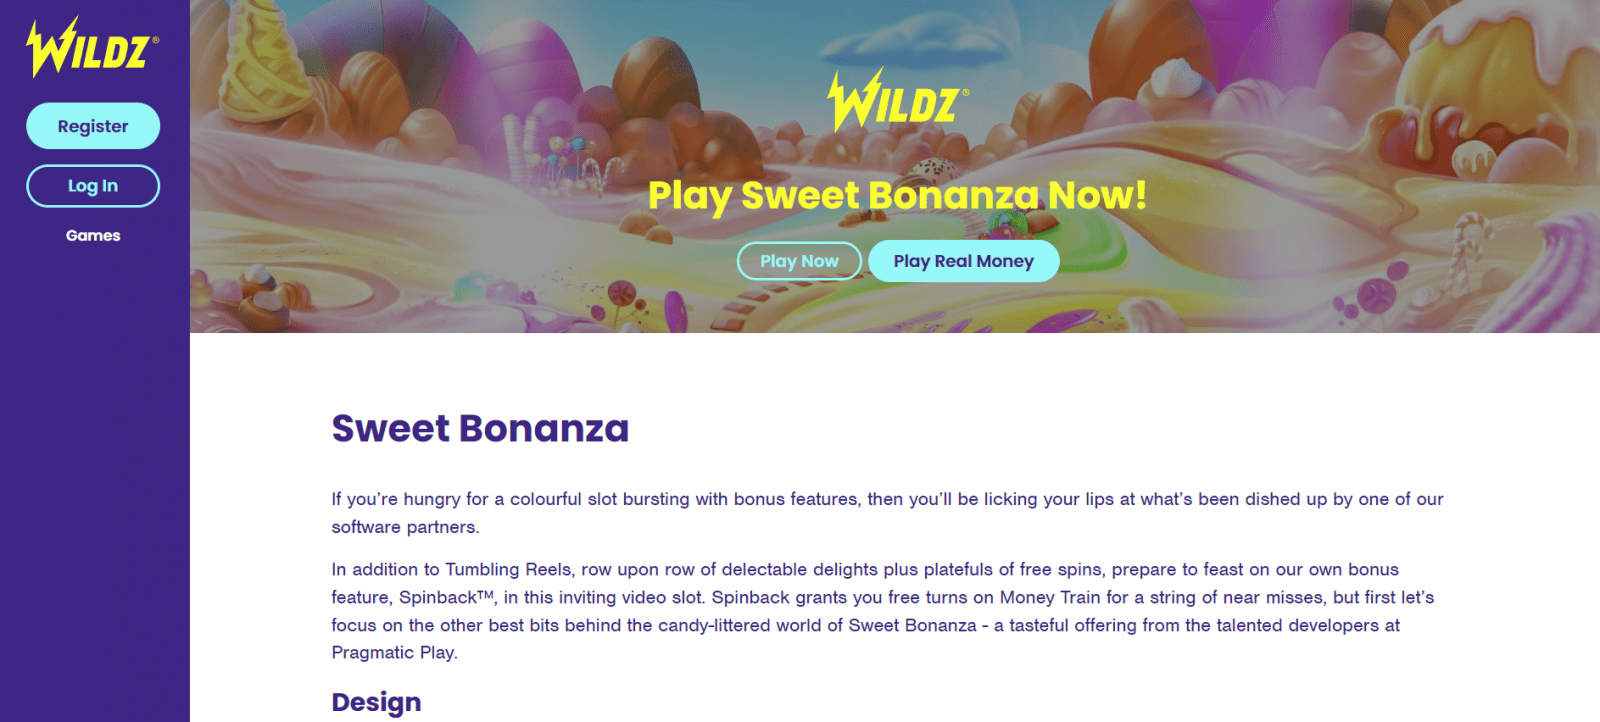 Play Wildz Sweet Bonanza